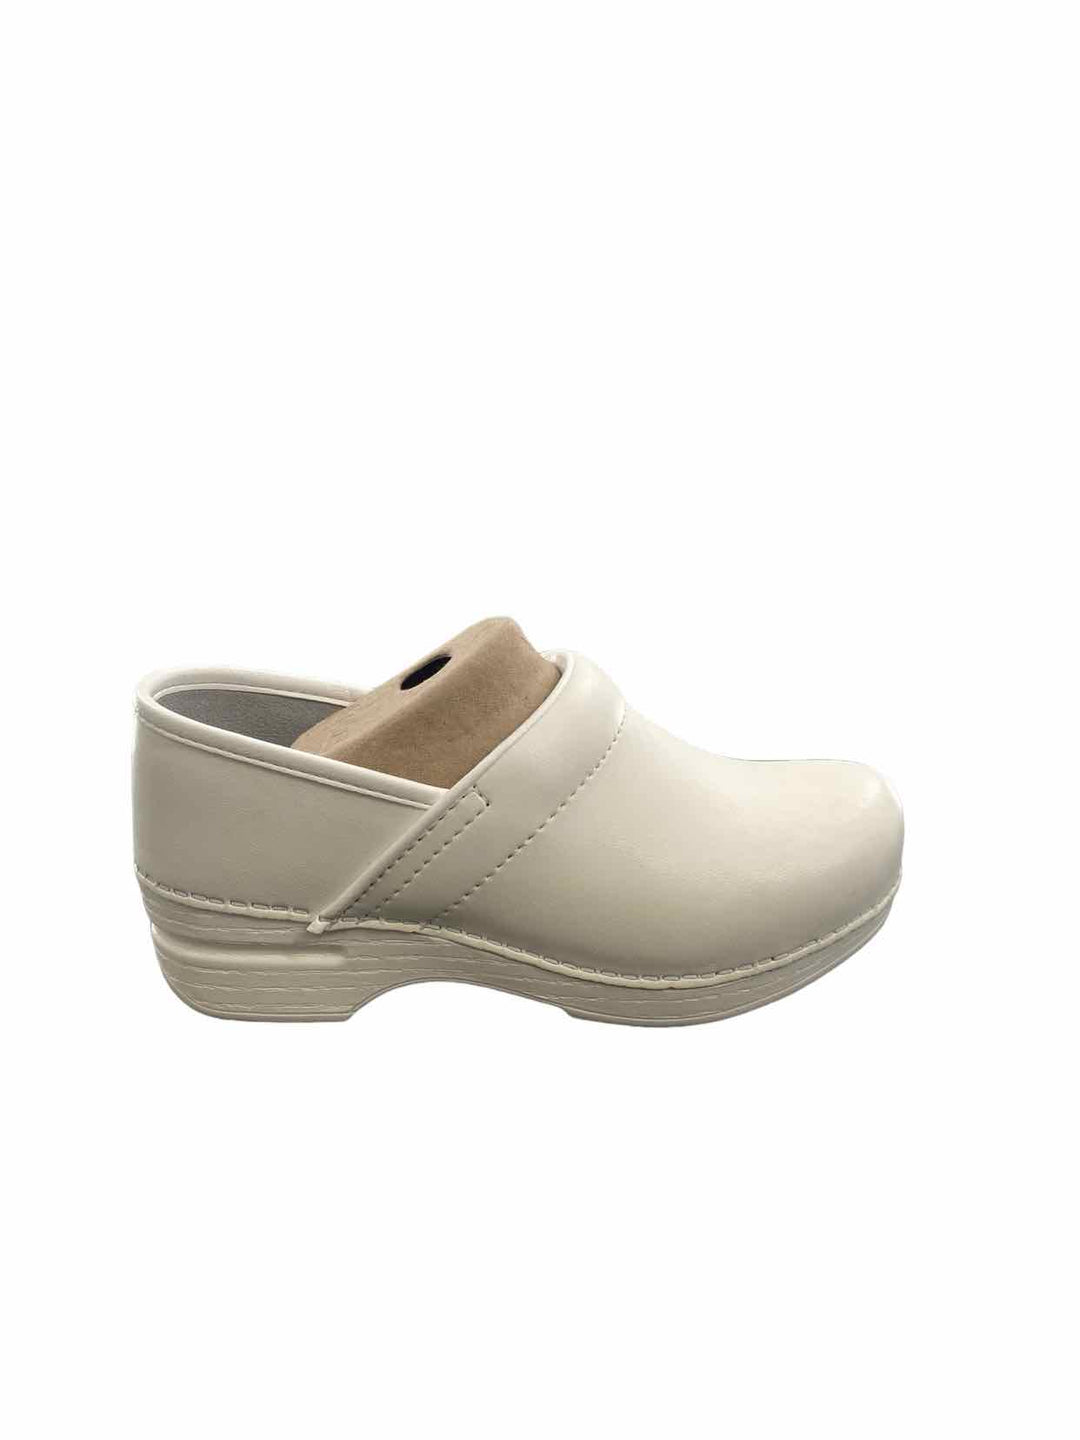 Dansko Shoe Size 36 White Leather Clogs